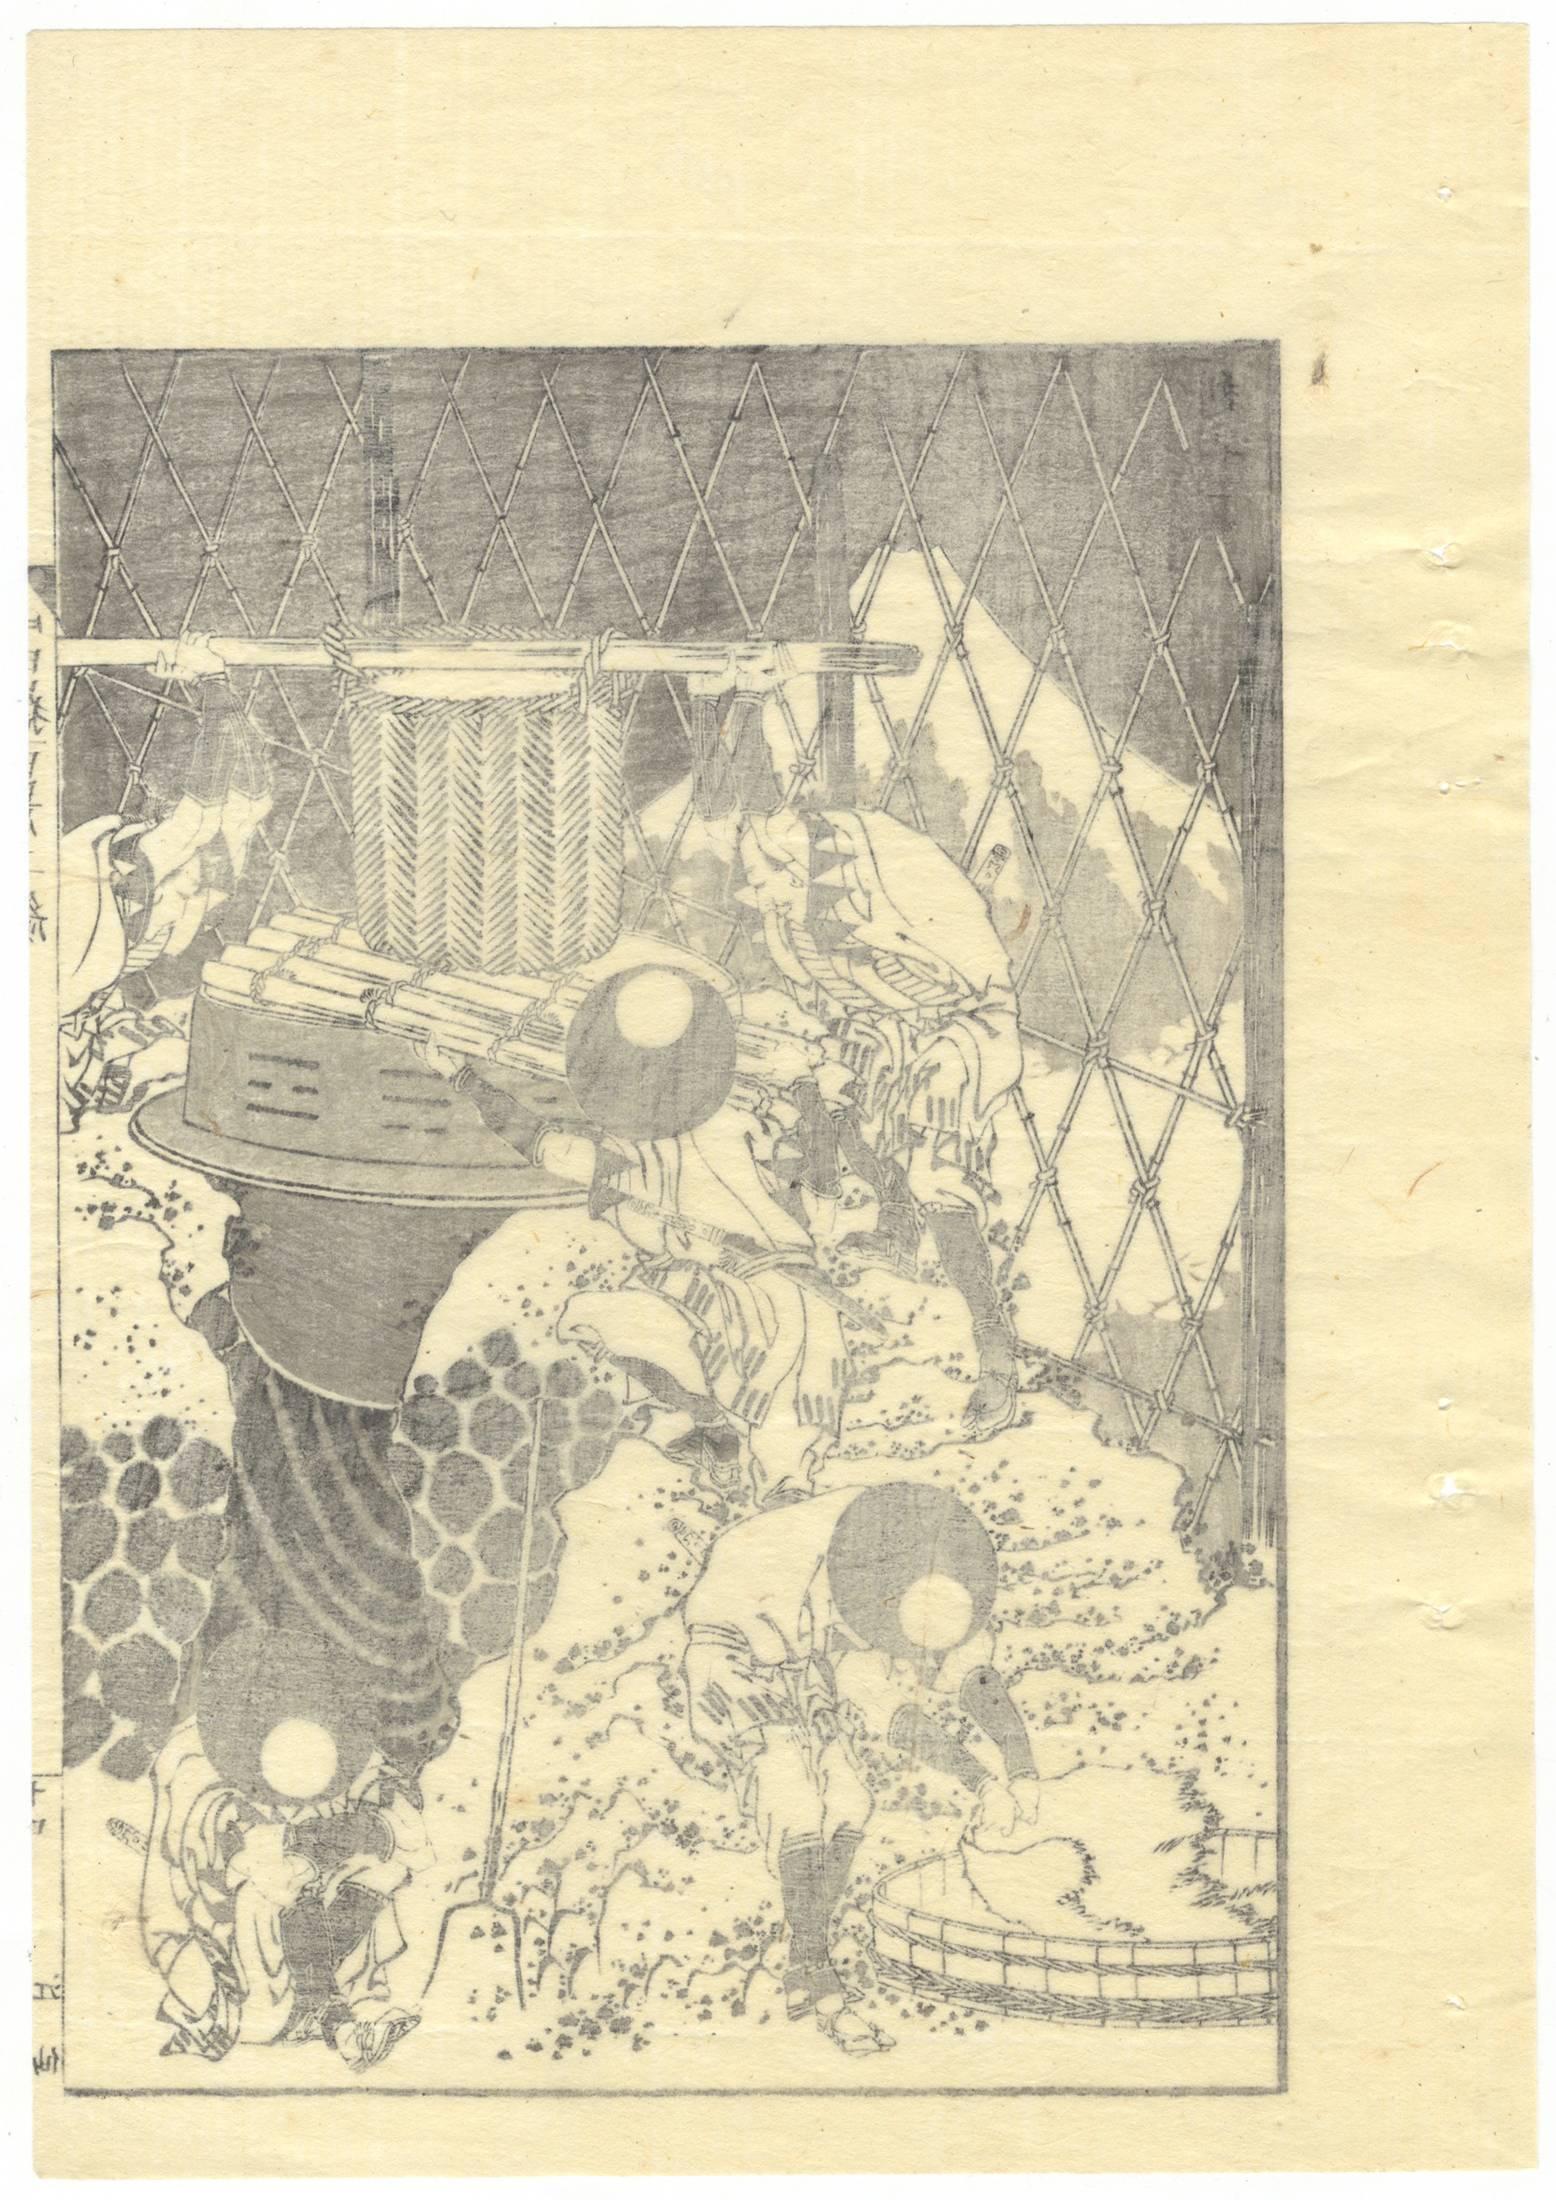 Hand-printed on traditional Japanese washi paper (mulberry tree paper).
Artist: Katsushika Hokusai
Title: Sword and Mt. Fuji
Series: 100 Views of Mt Fuji volume 2
Publisher: Toheki-do Eirakuya Toshiro
Published: 1835-1880.

This print is from the